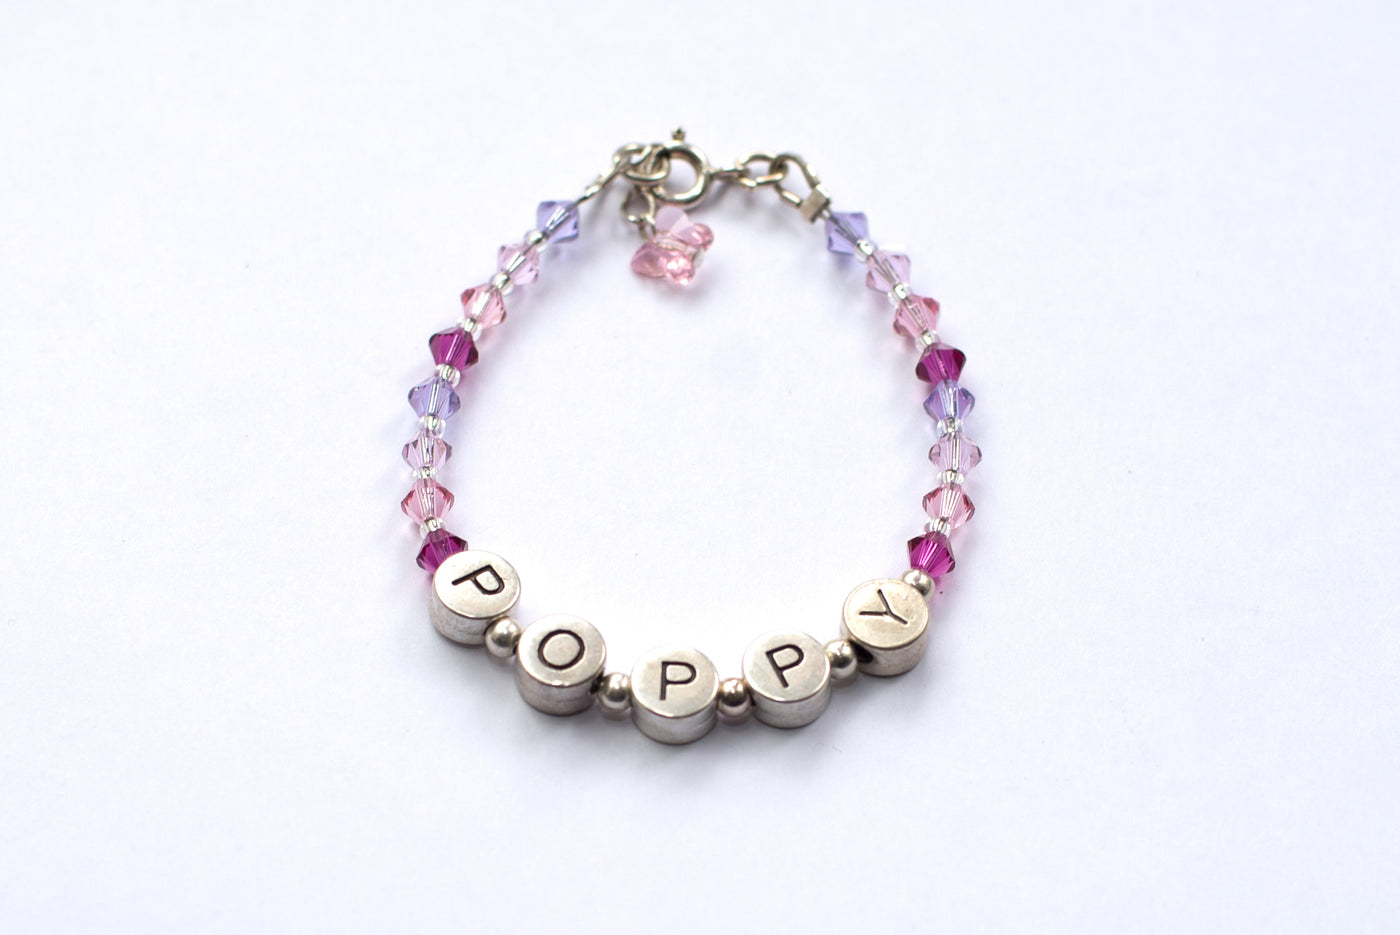 Personalised Name Bracelet - Swarovski Crystals Pink Mix